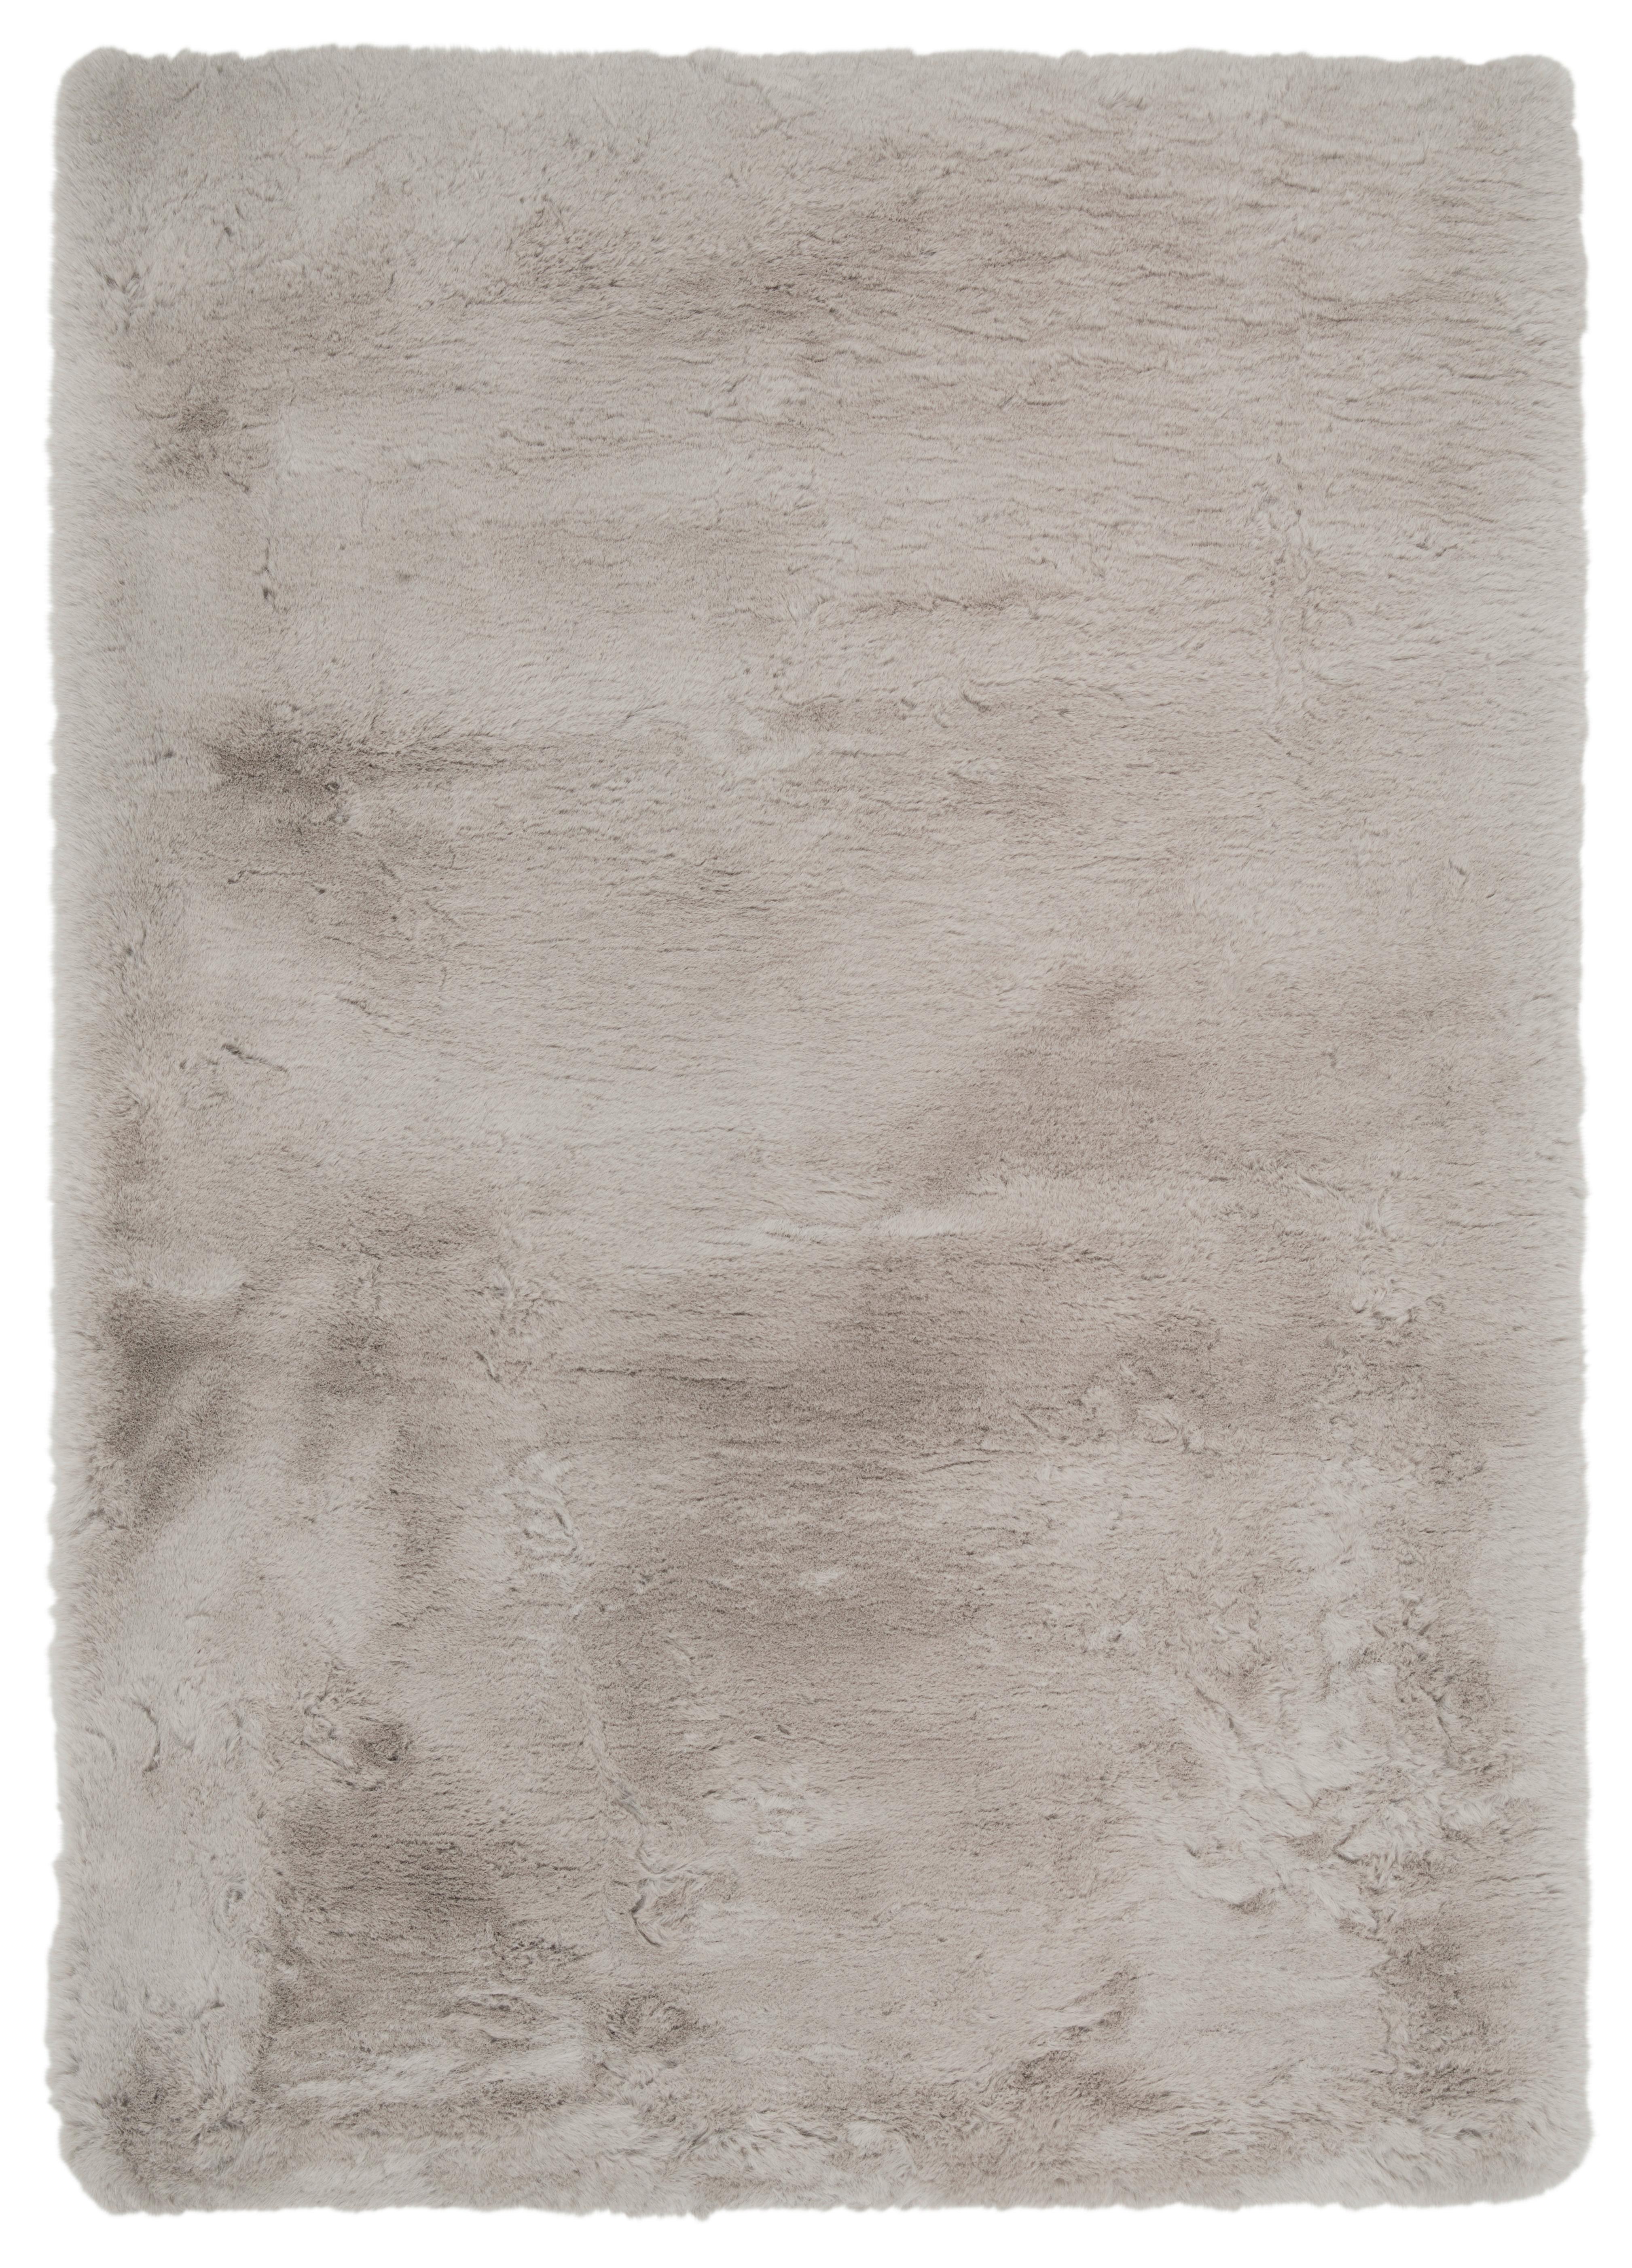 Kunstfell Melanie in Grau ca. 80x150cm - Grau, ROMANTIK / LANDHAUS, Textil (80/150cm) - Modern Living